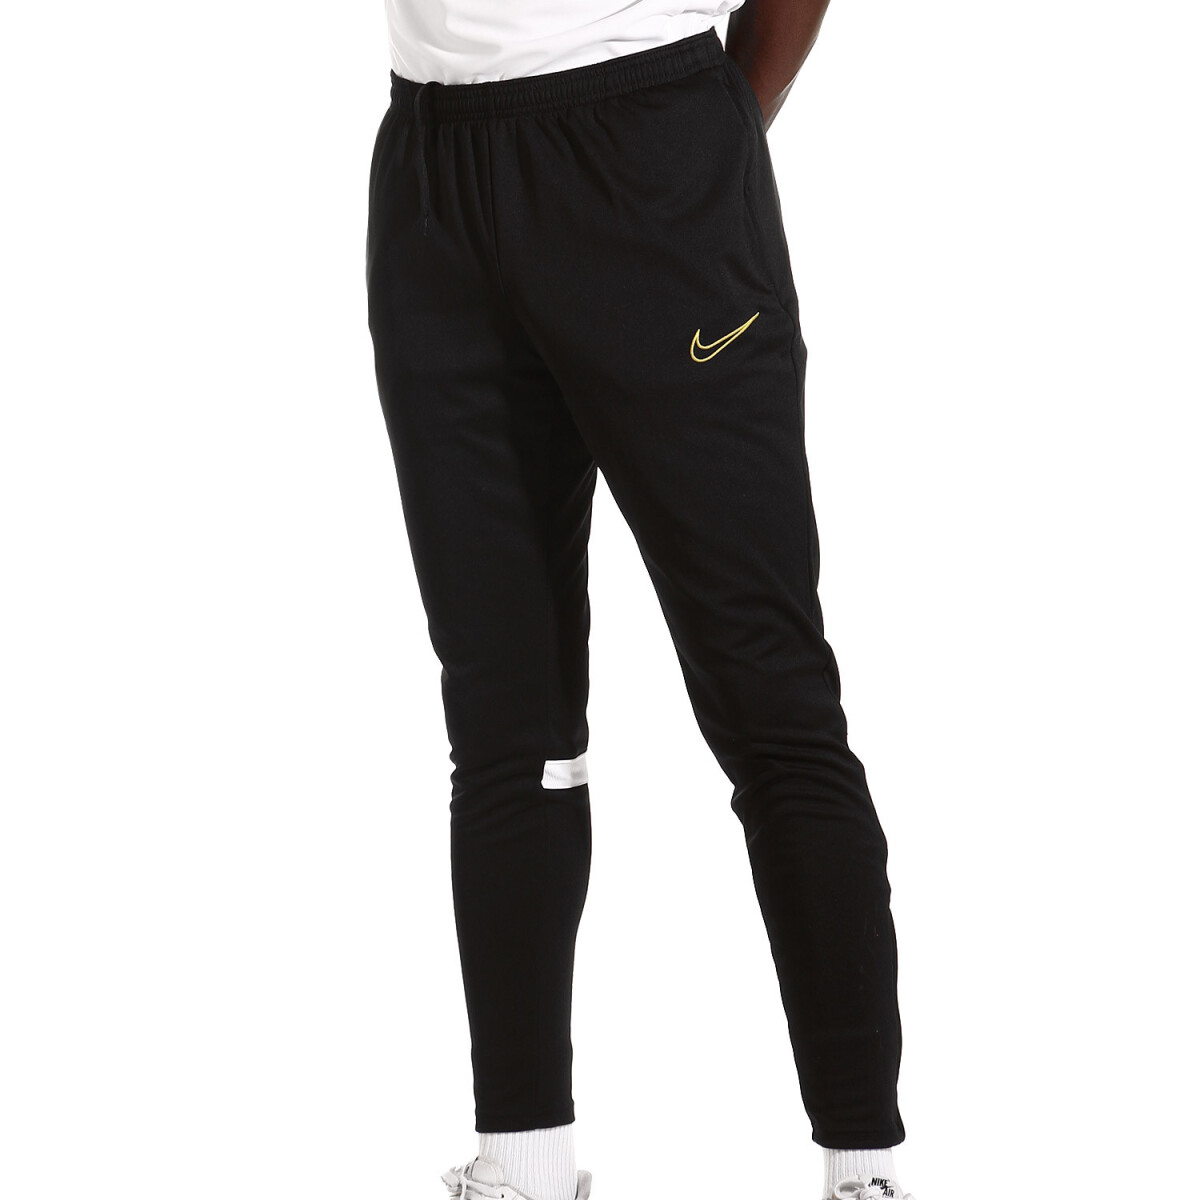 Pantalon Nike Futbol Hombre Kpz - Color Único 